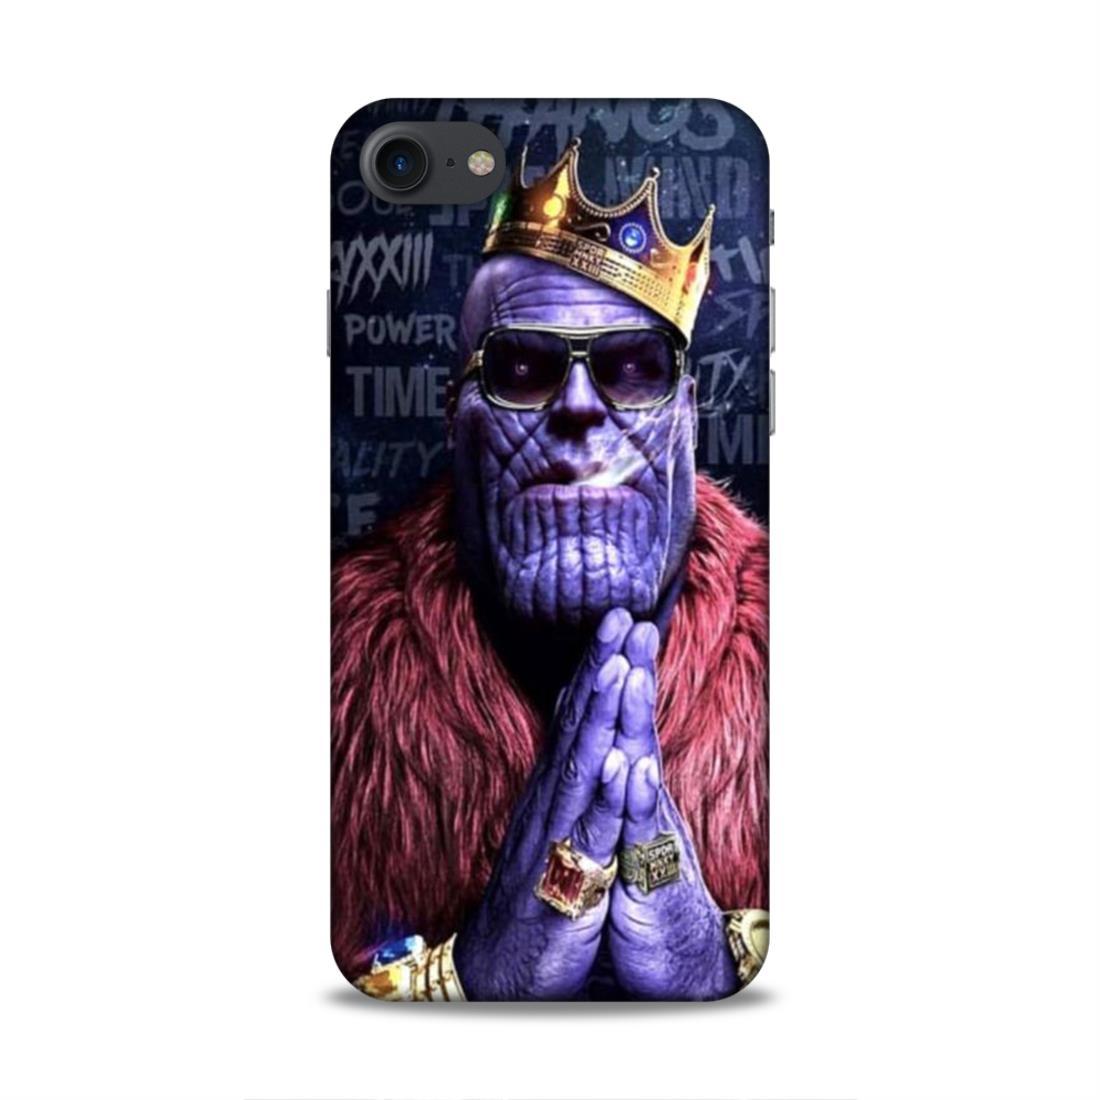 Thanoss Fanart iPhone 7 Phone Back Cover